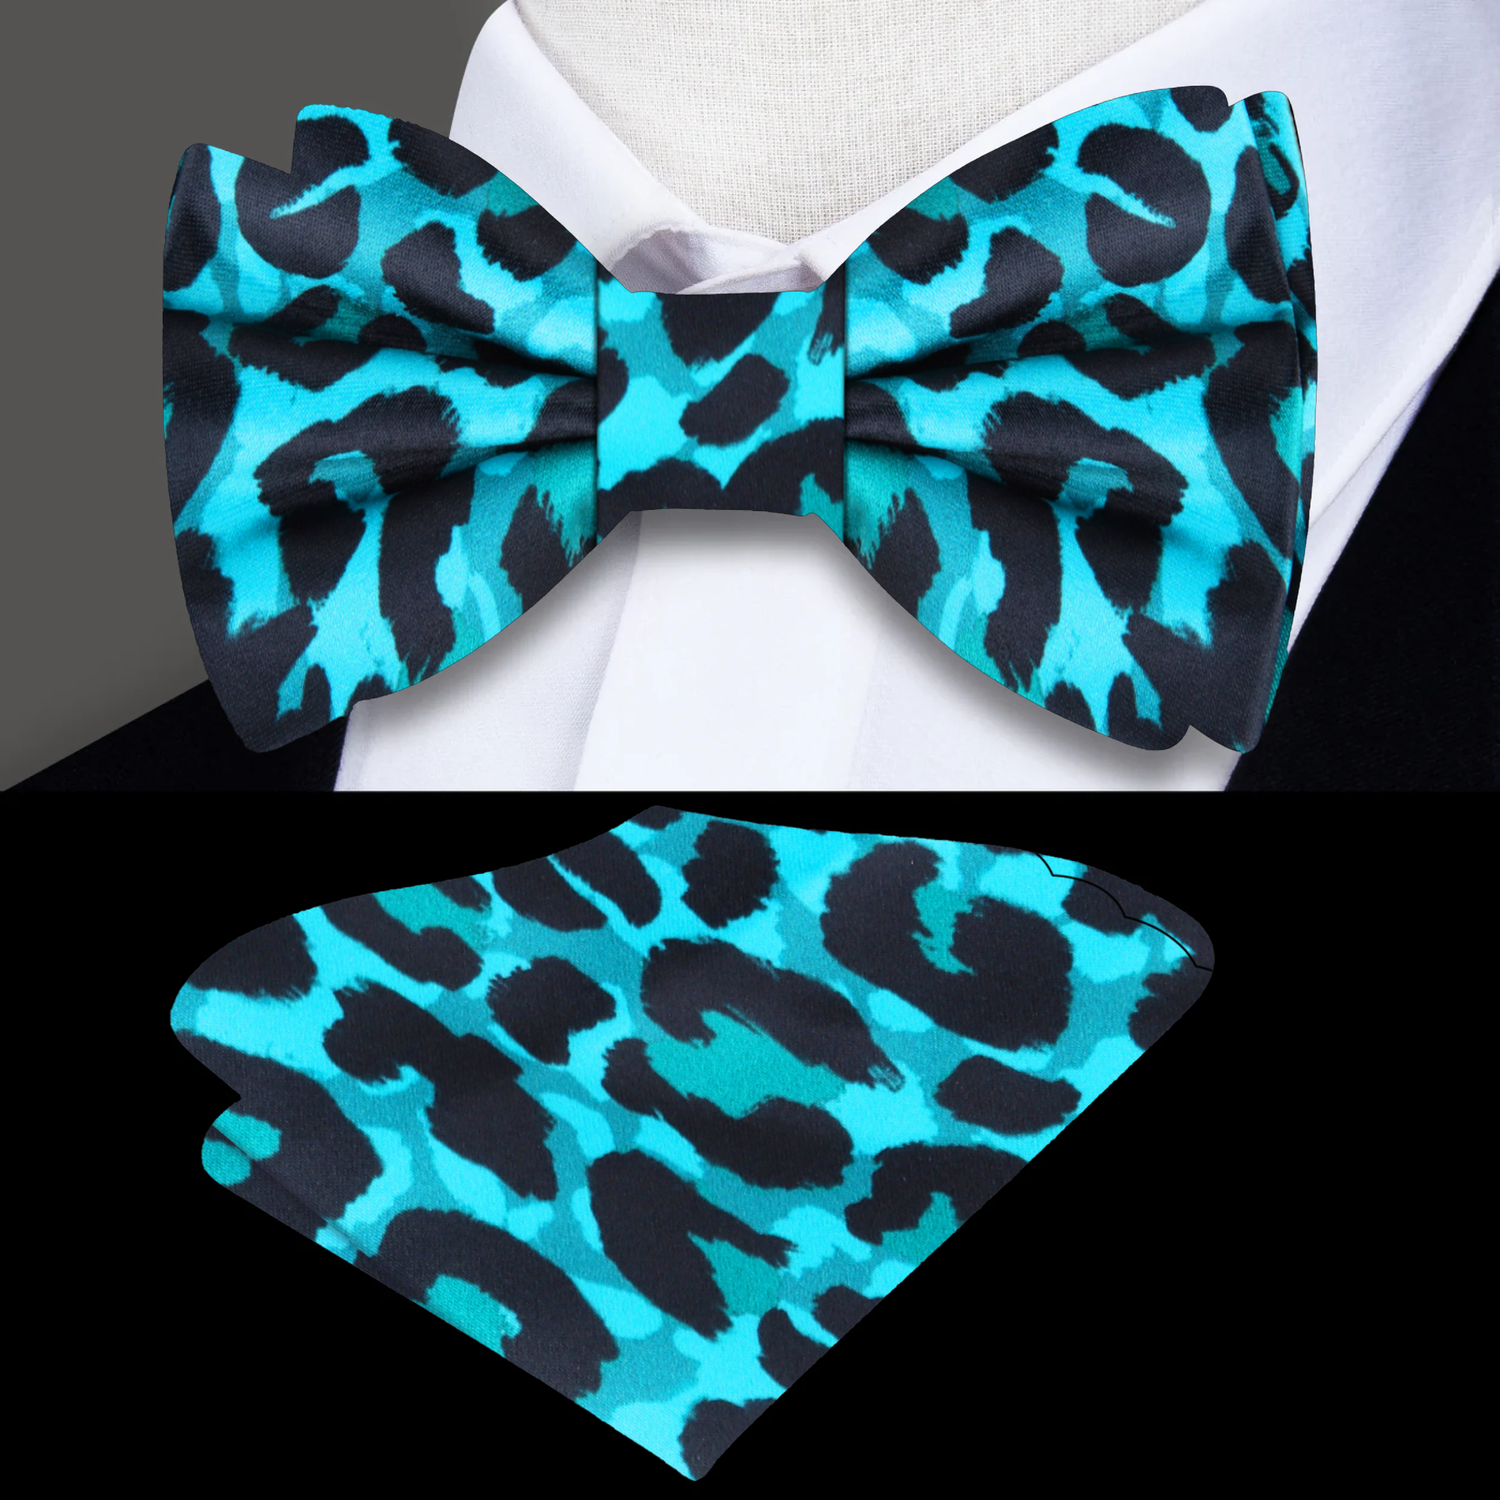 Light Blue, Black Cheetah Bow tie and Pocket Square||Light Blue